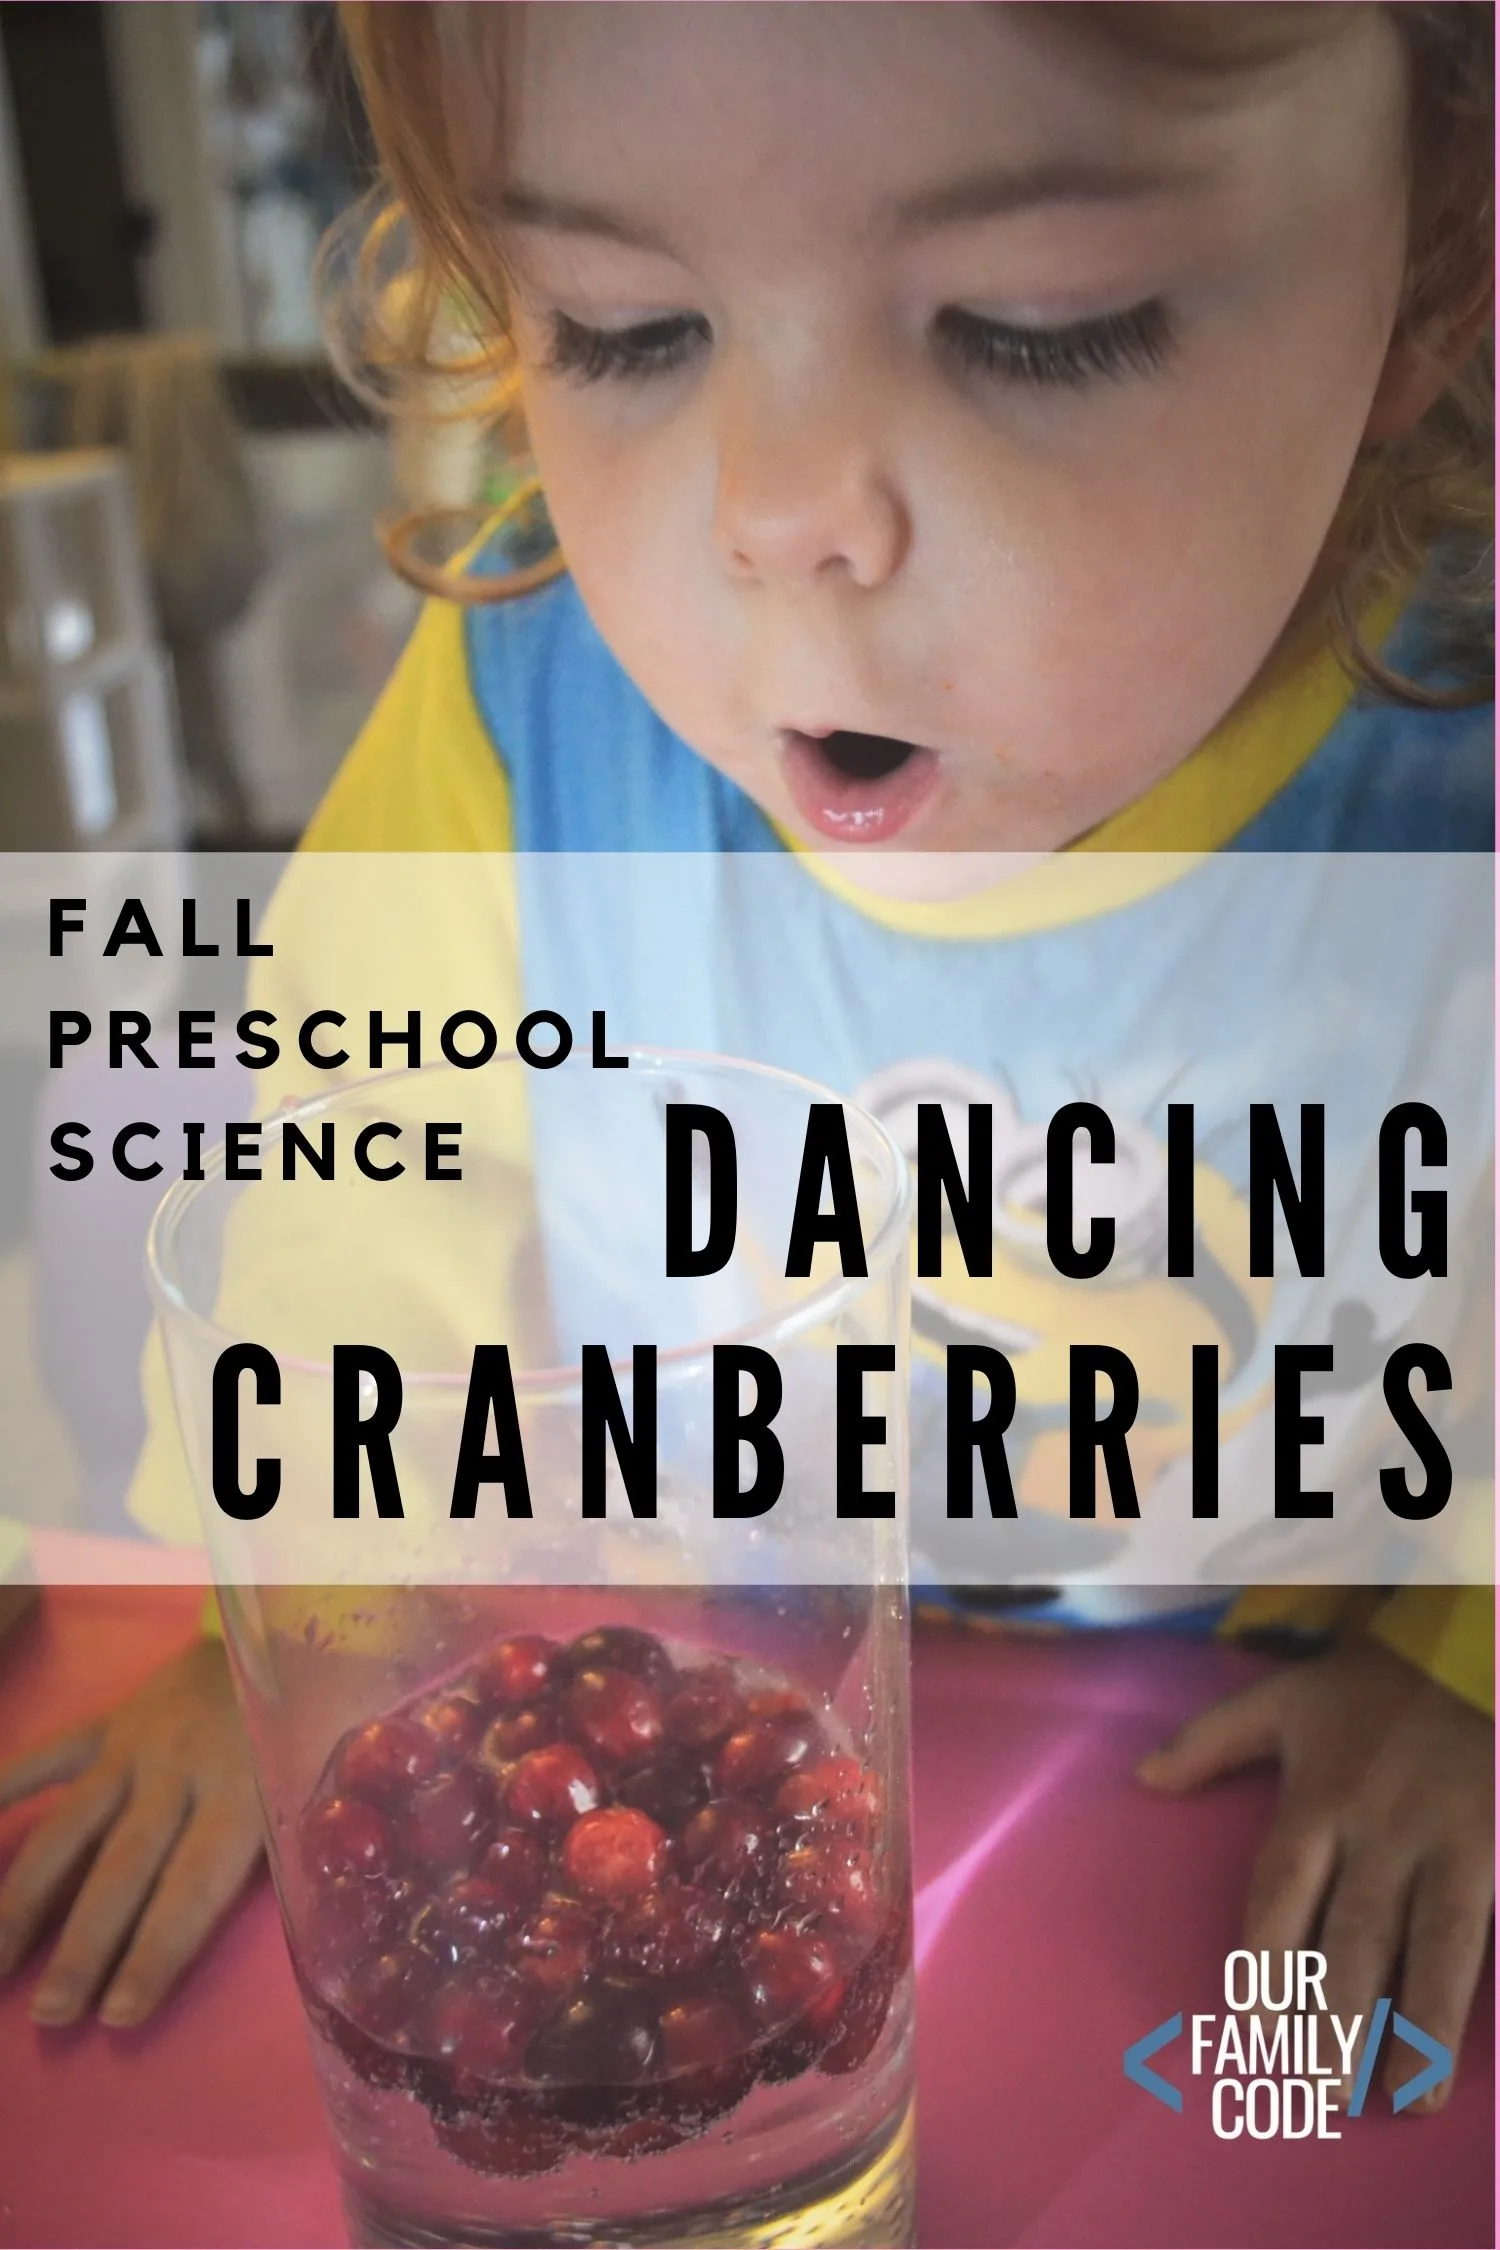 Dancing Cranberries fall preschool science activity